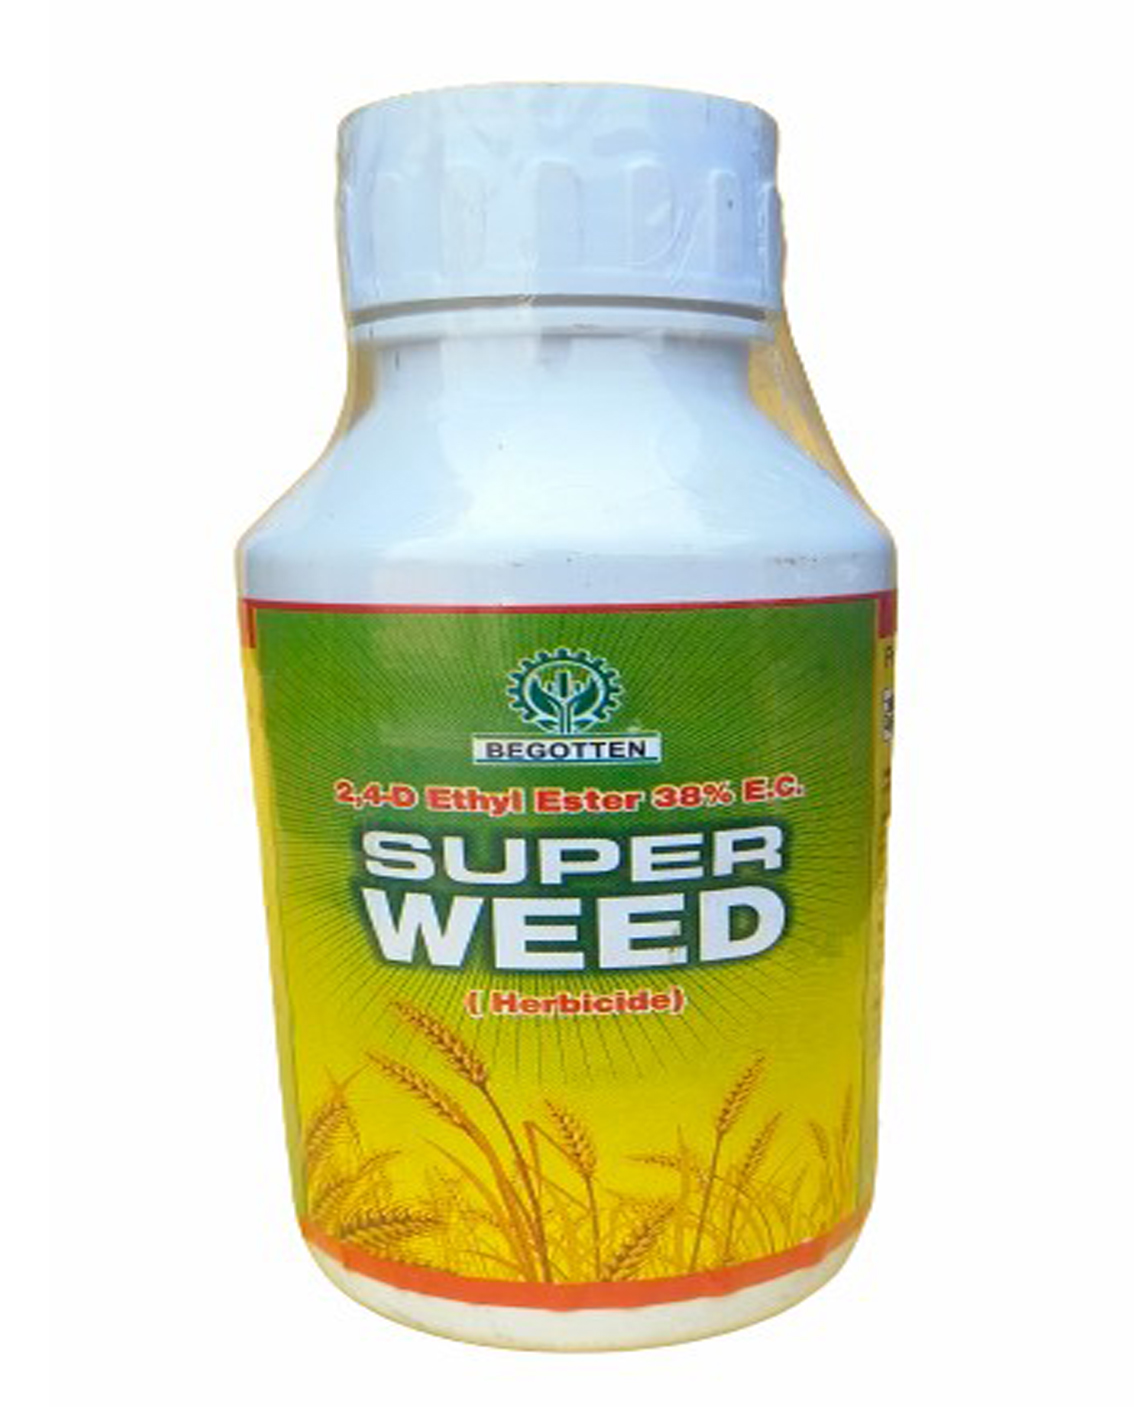 SUPER WEED